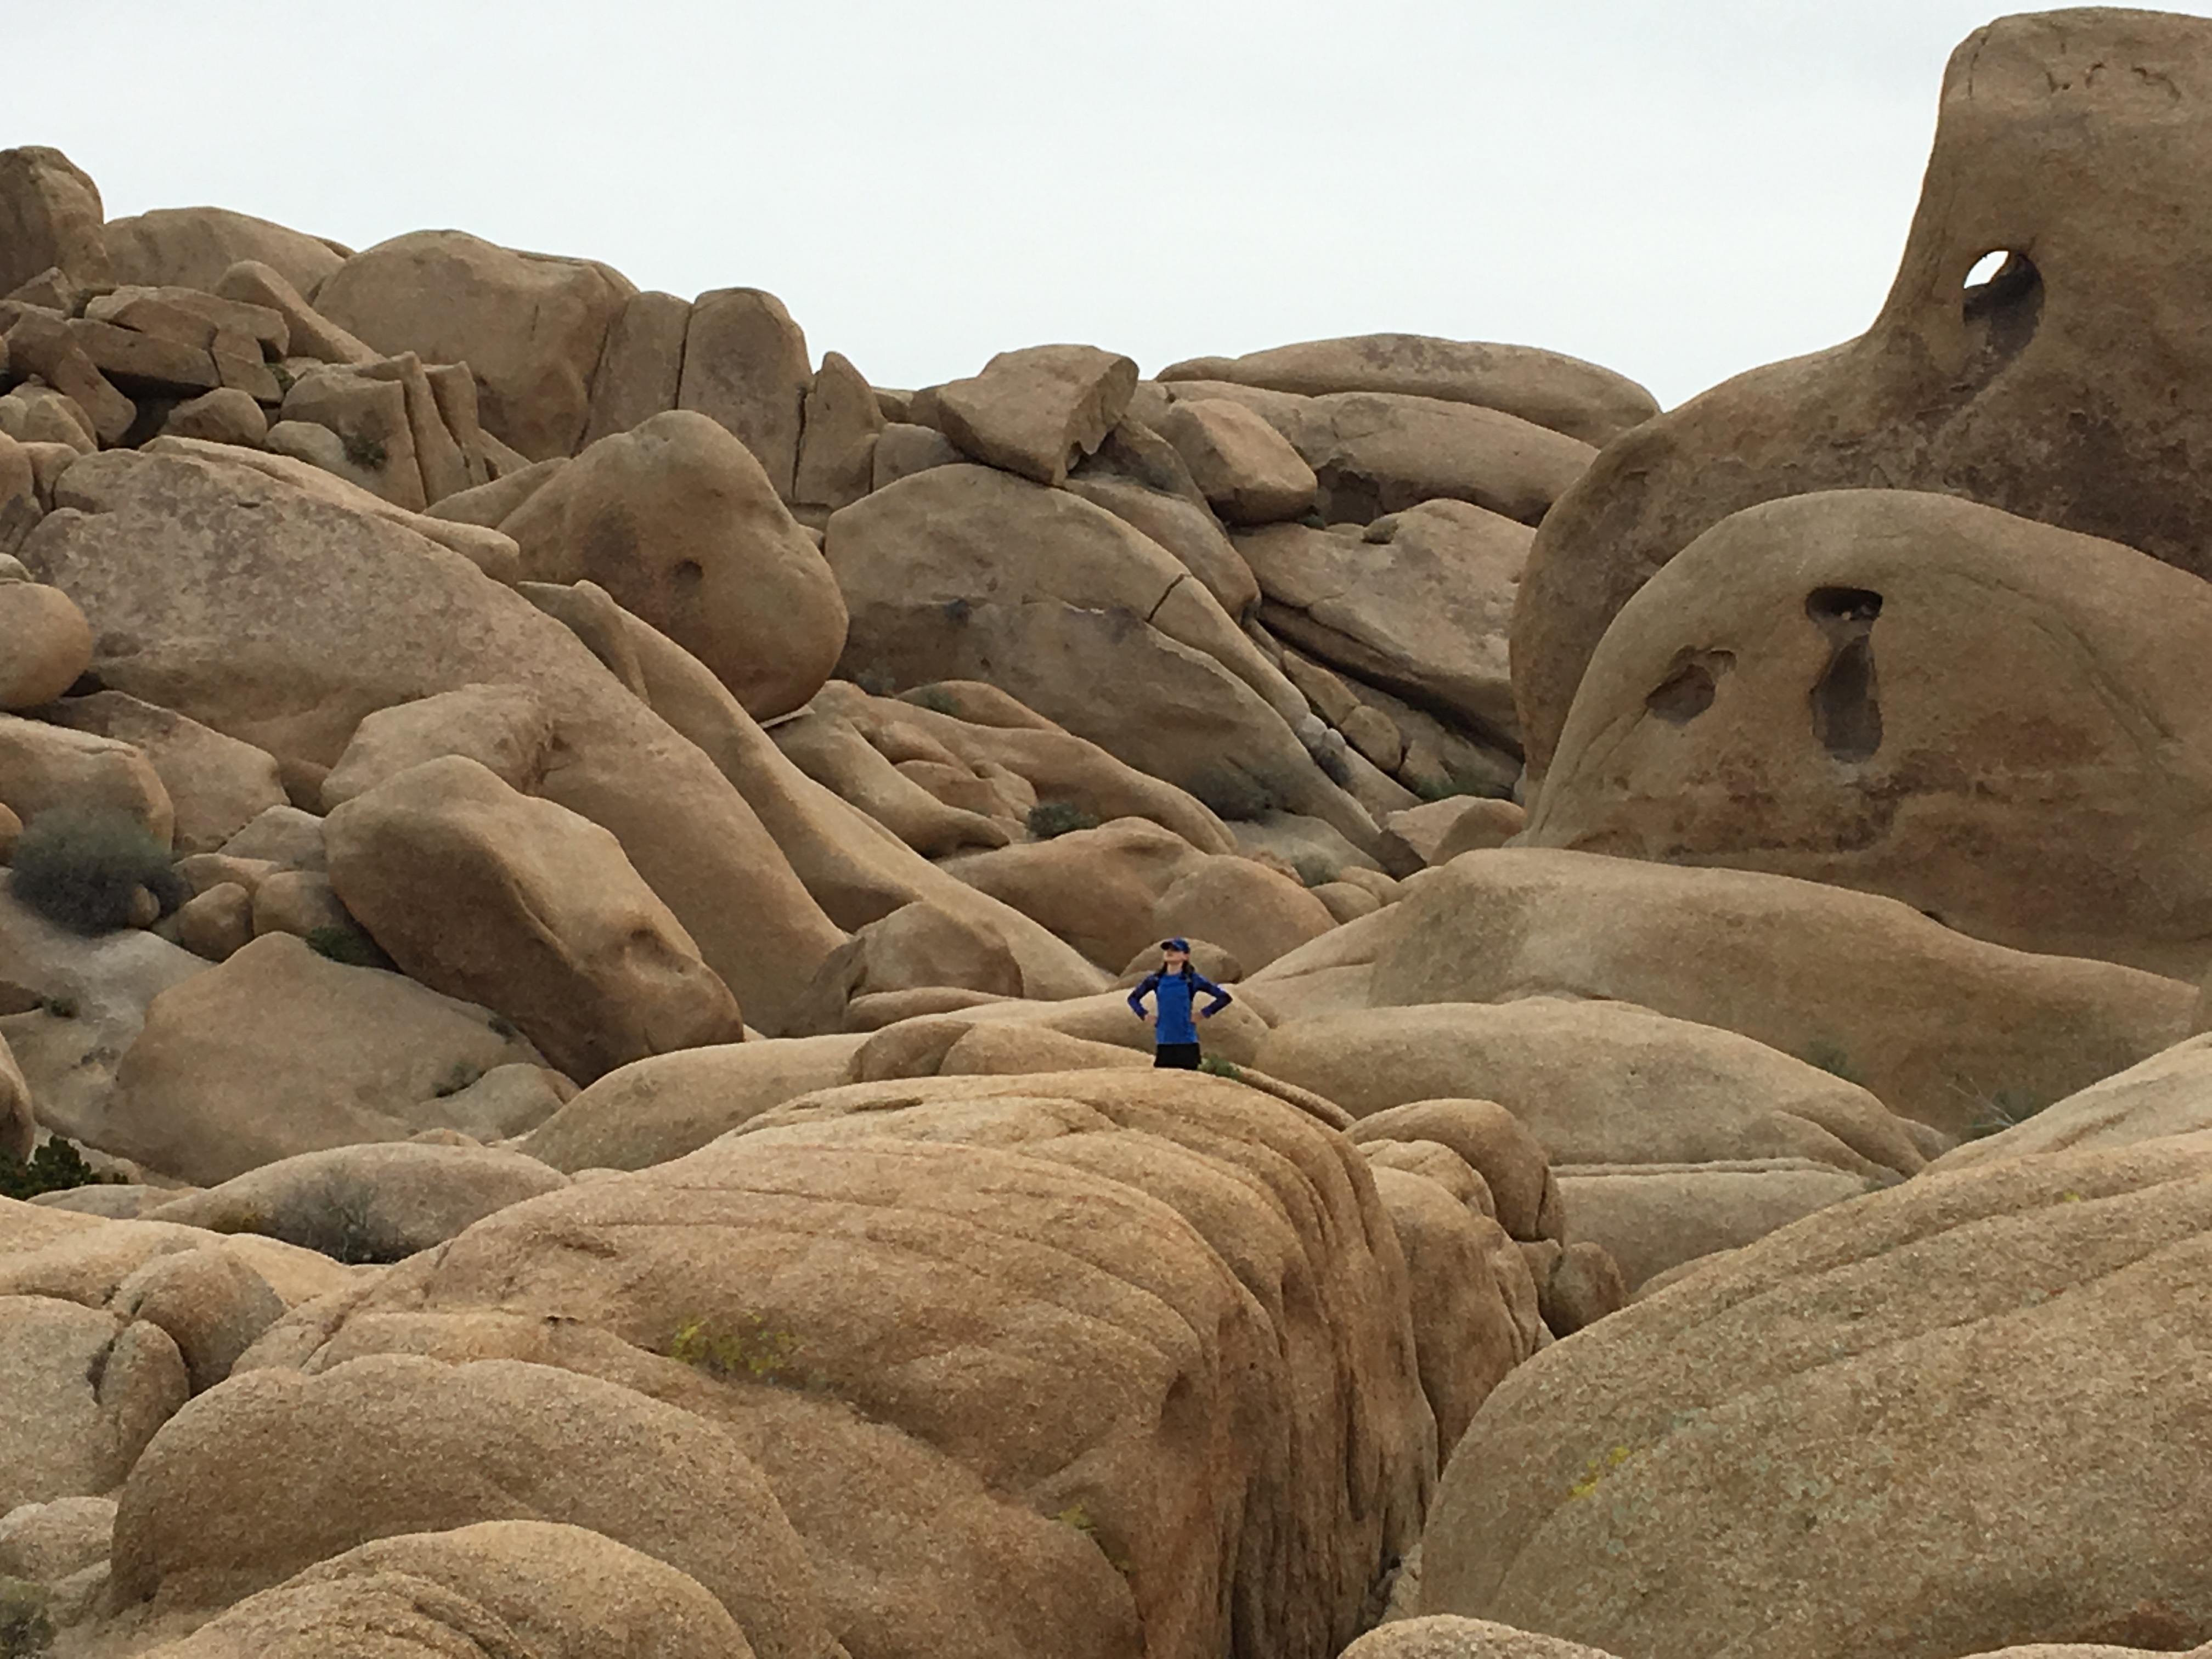 Igneous Rocks - Geology (U.S. National Park Service)